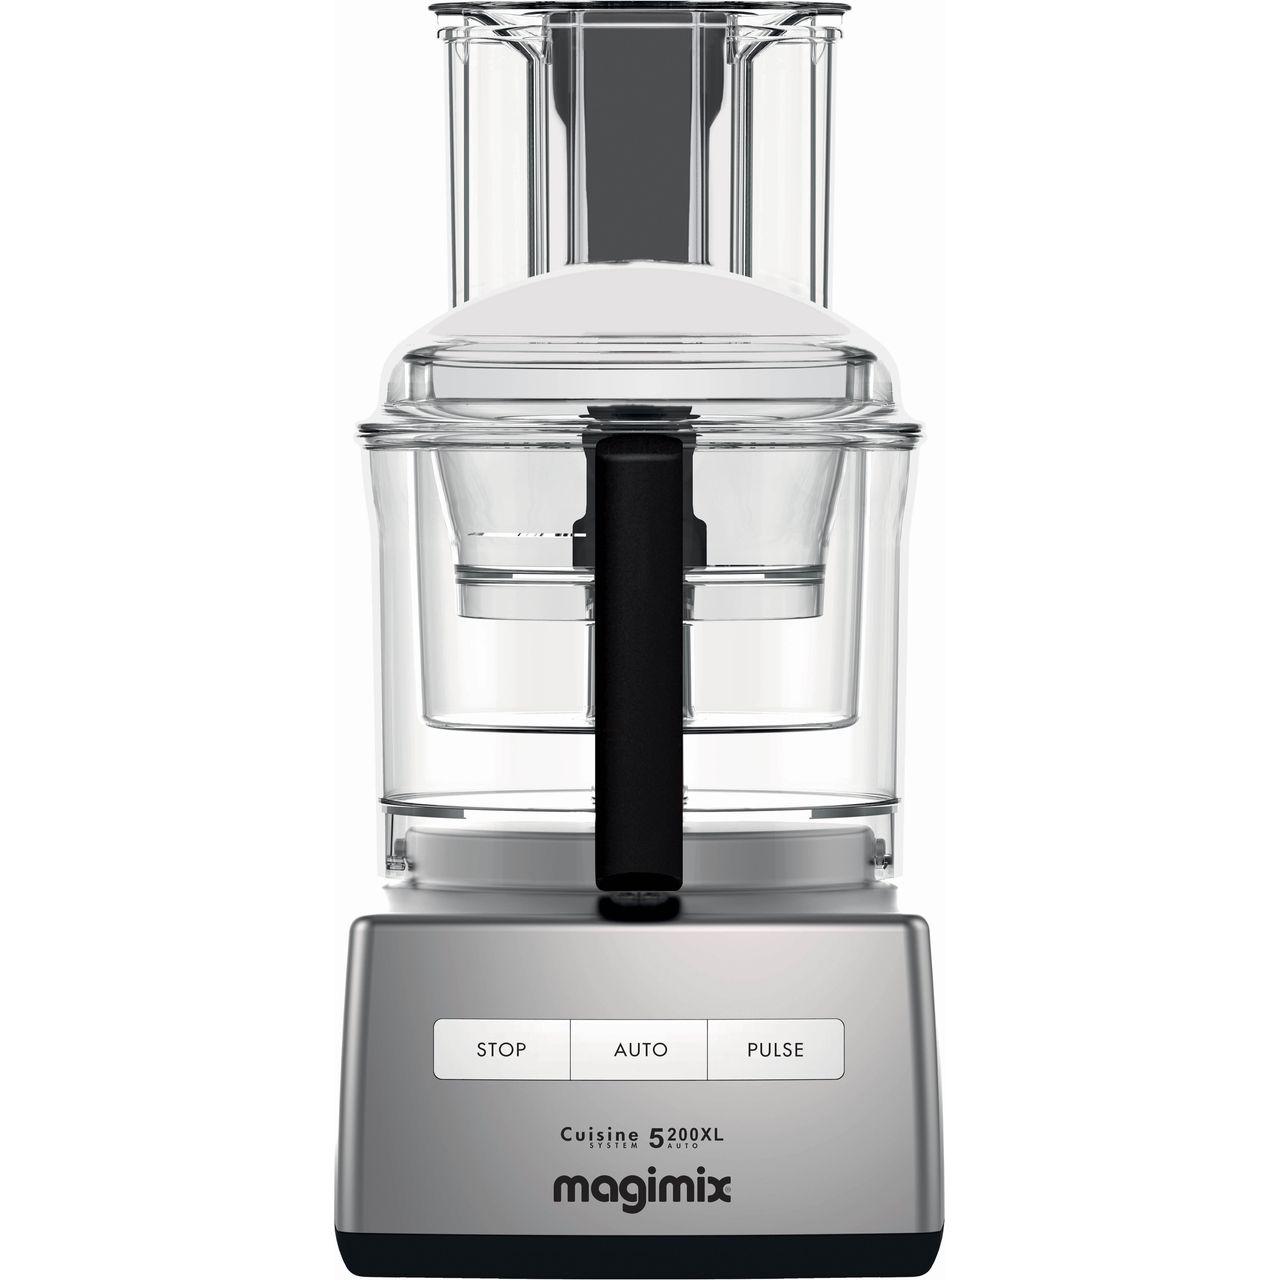 Magimix 5200XL Premium 18709 3.6 Litre Food Processor With 12 Accessories Review